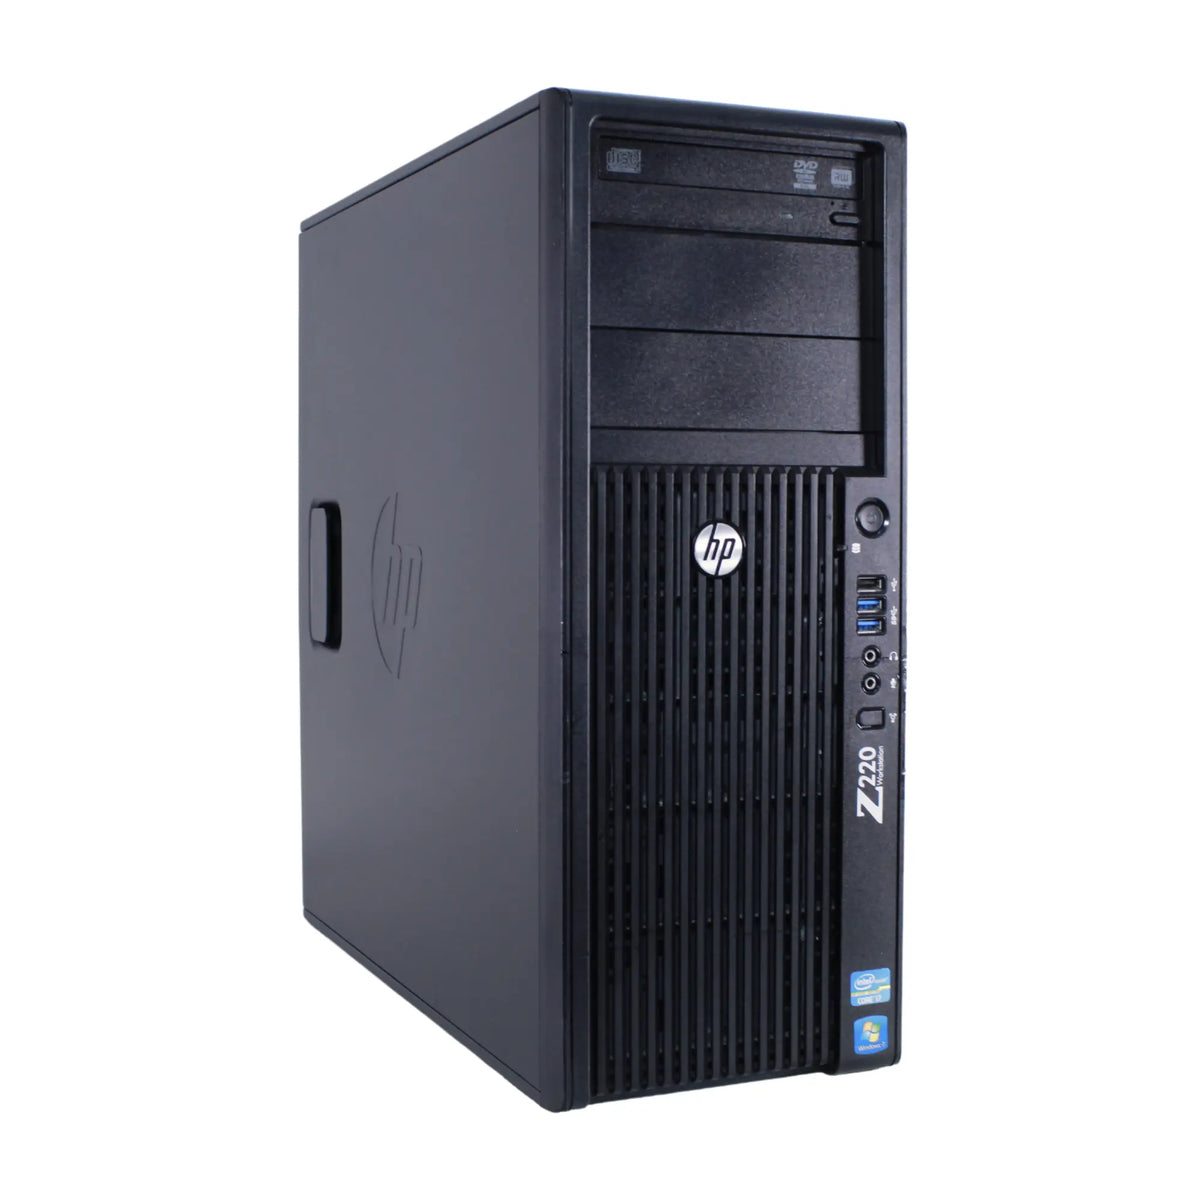 PC - HP Z220 Workstation | i7 3ra Gen. | 8 GB RAM | 240 GB SSD + 500 GB HDD | 1 GB Video | Torre